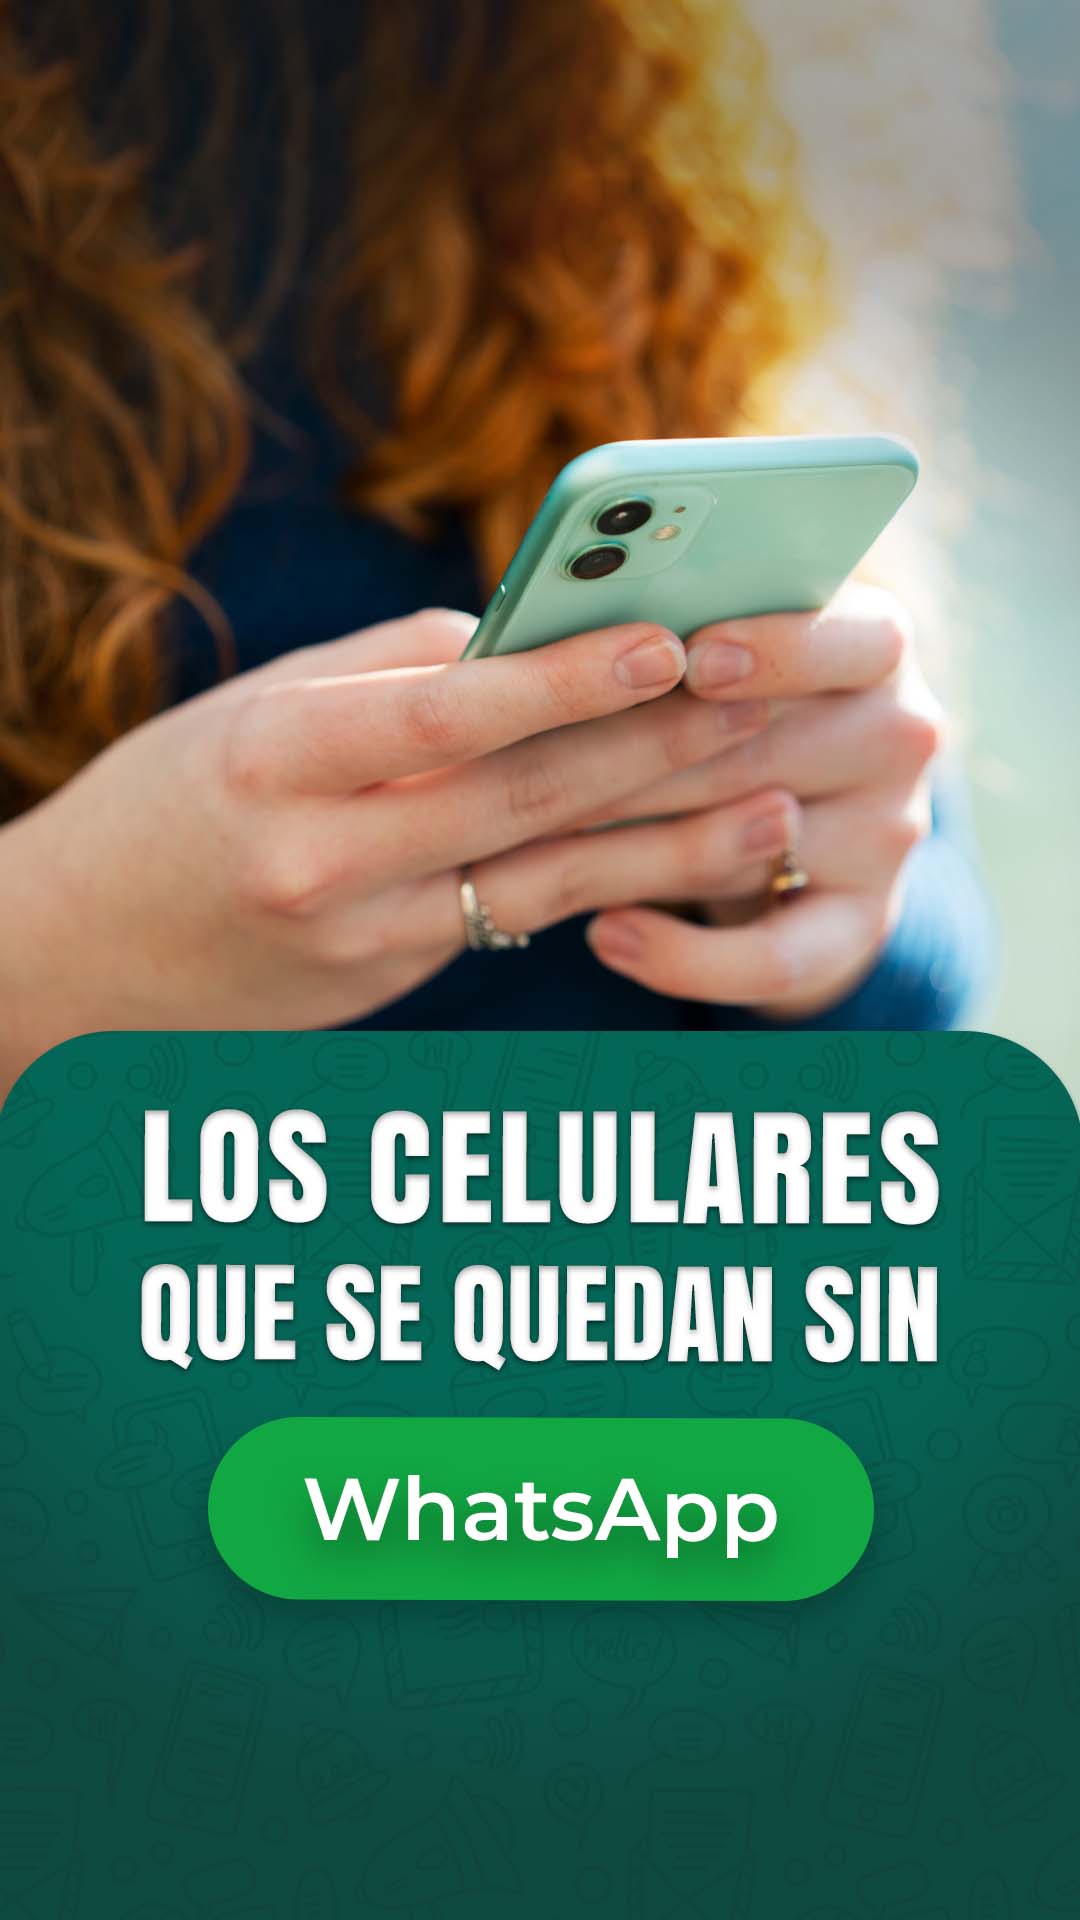 Los celulares que se quedan sin WhatsApp - Infobae Stories